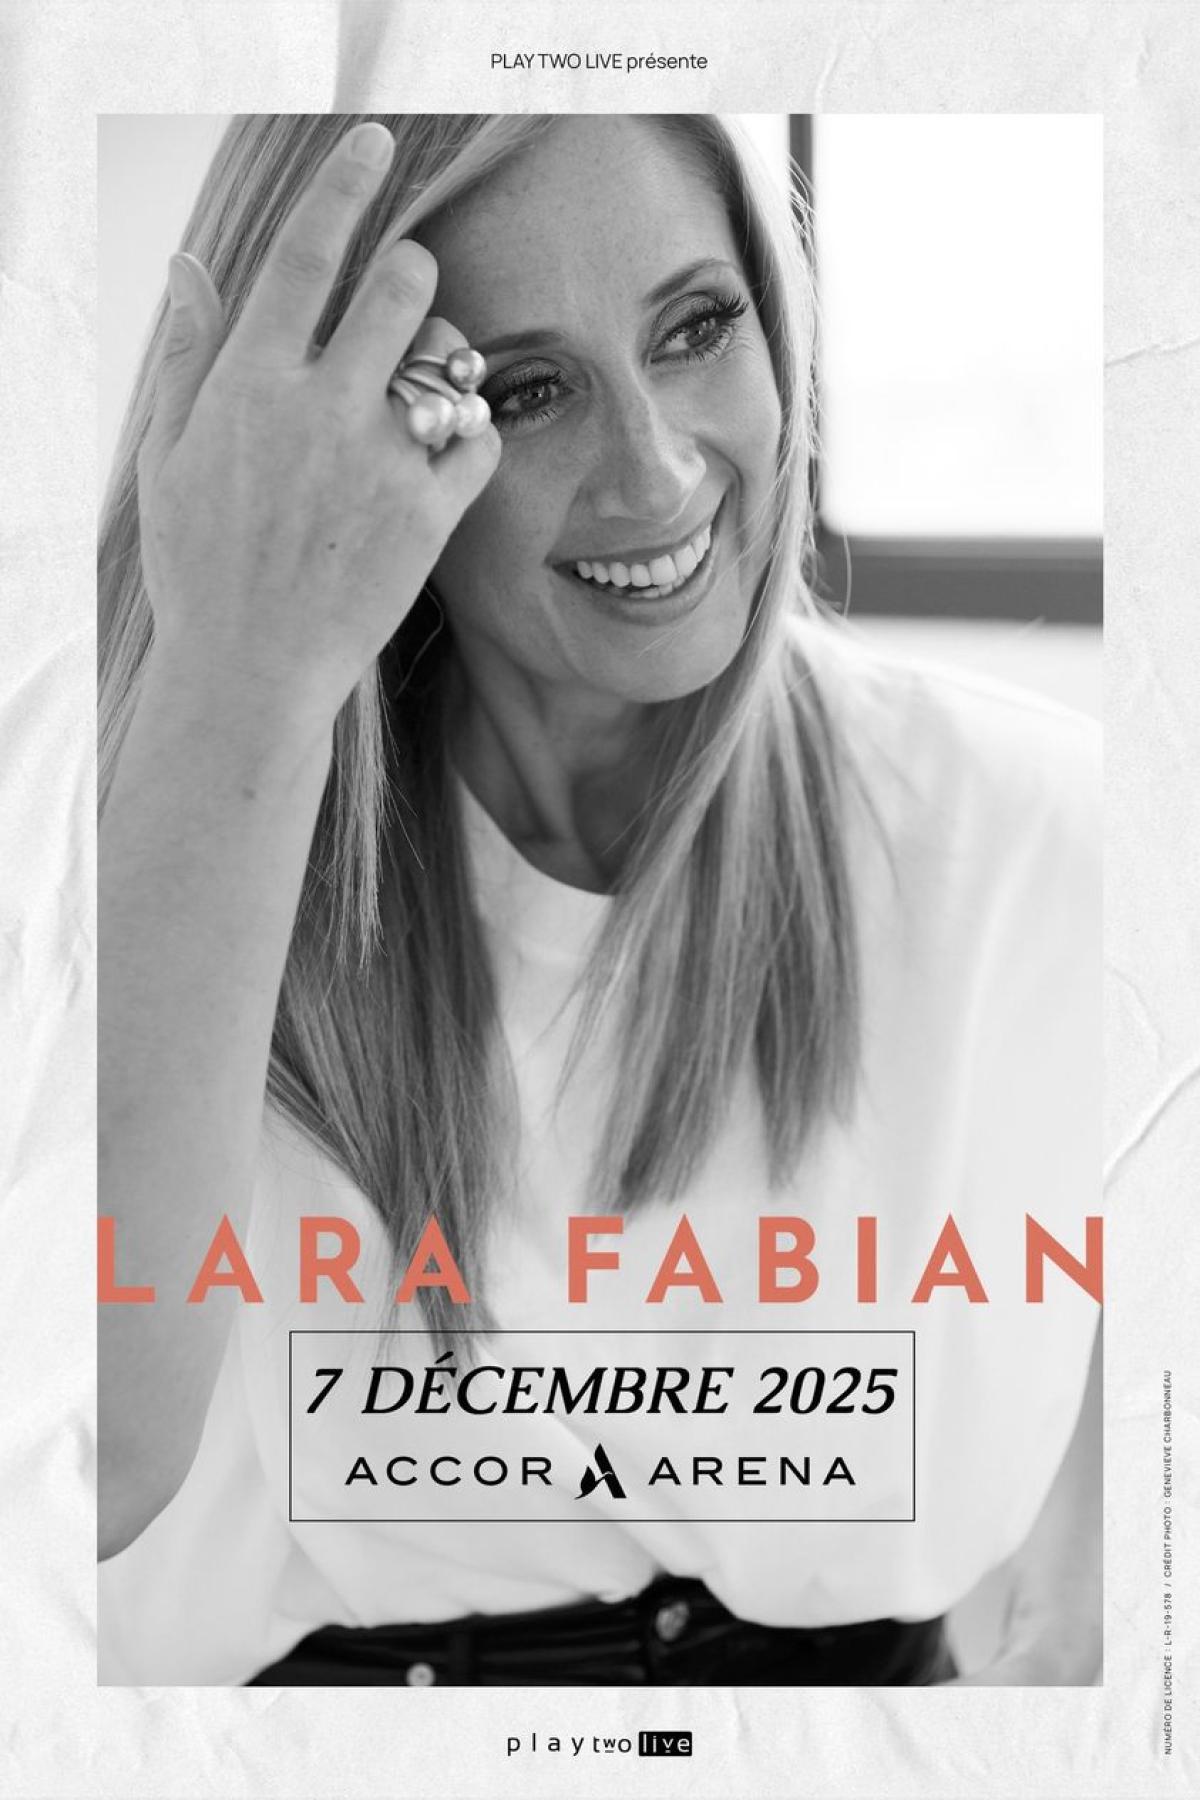 Lara Fabian at Accor Arena Tickets